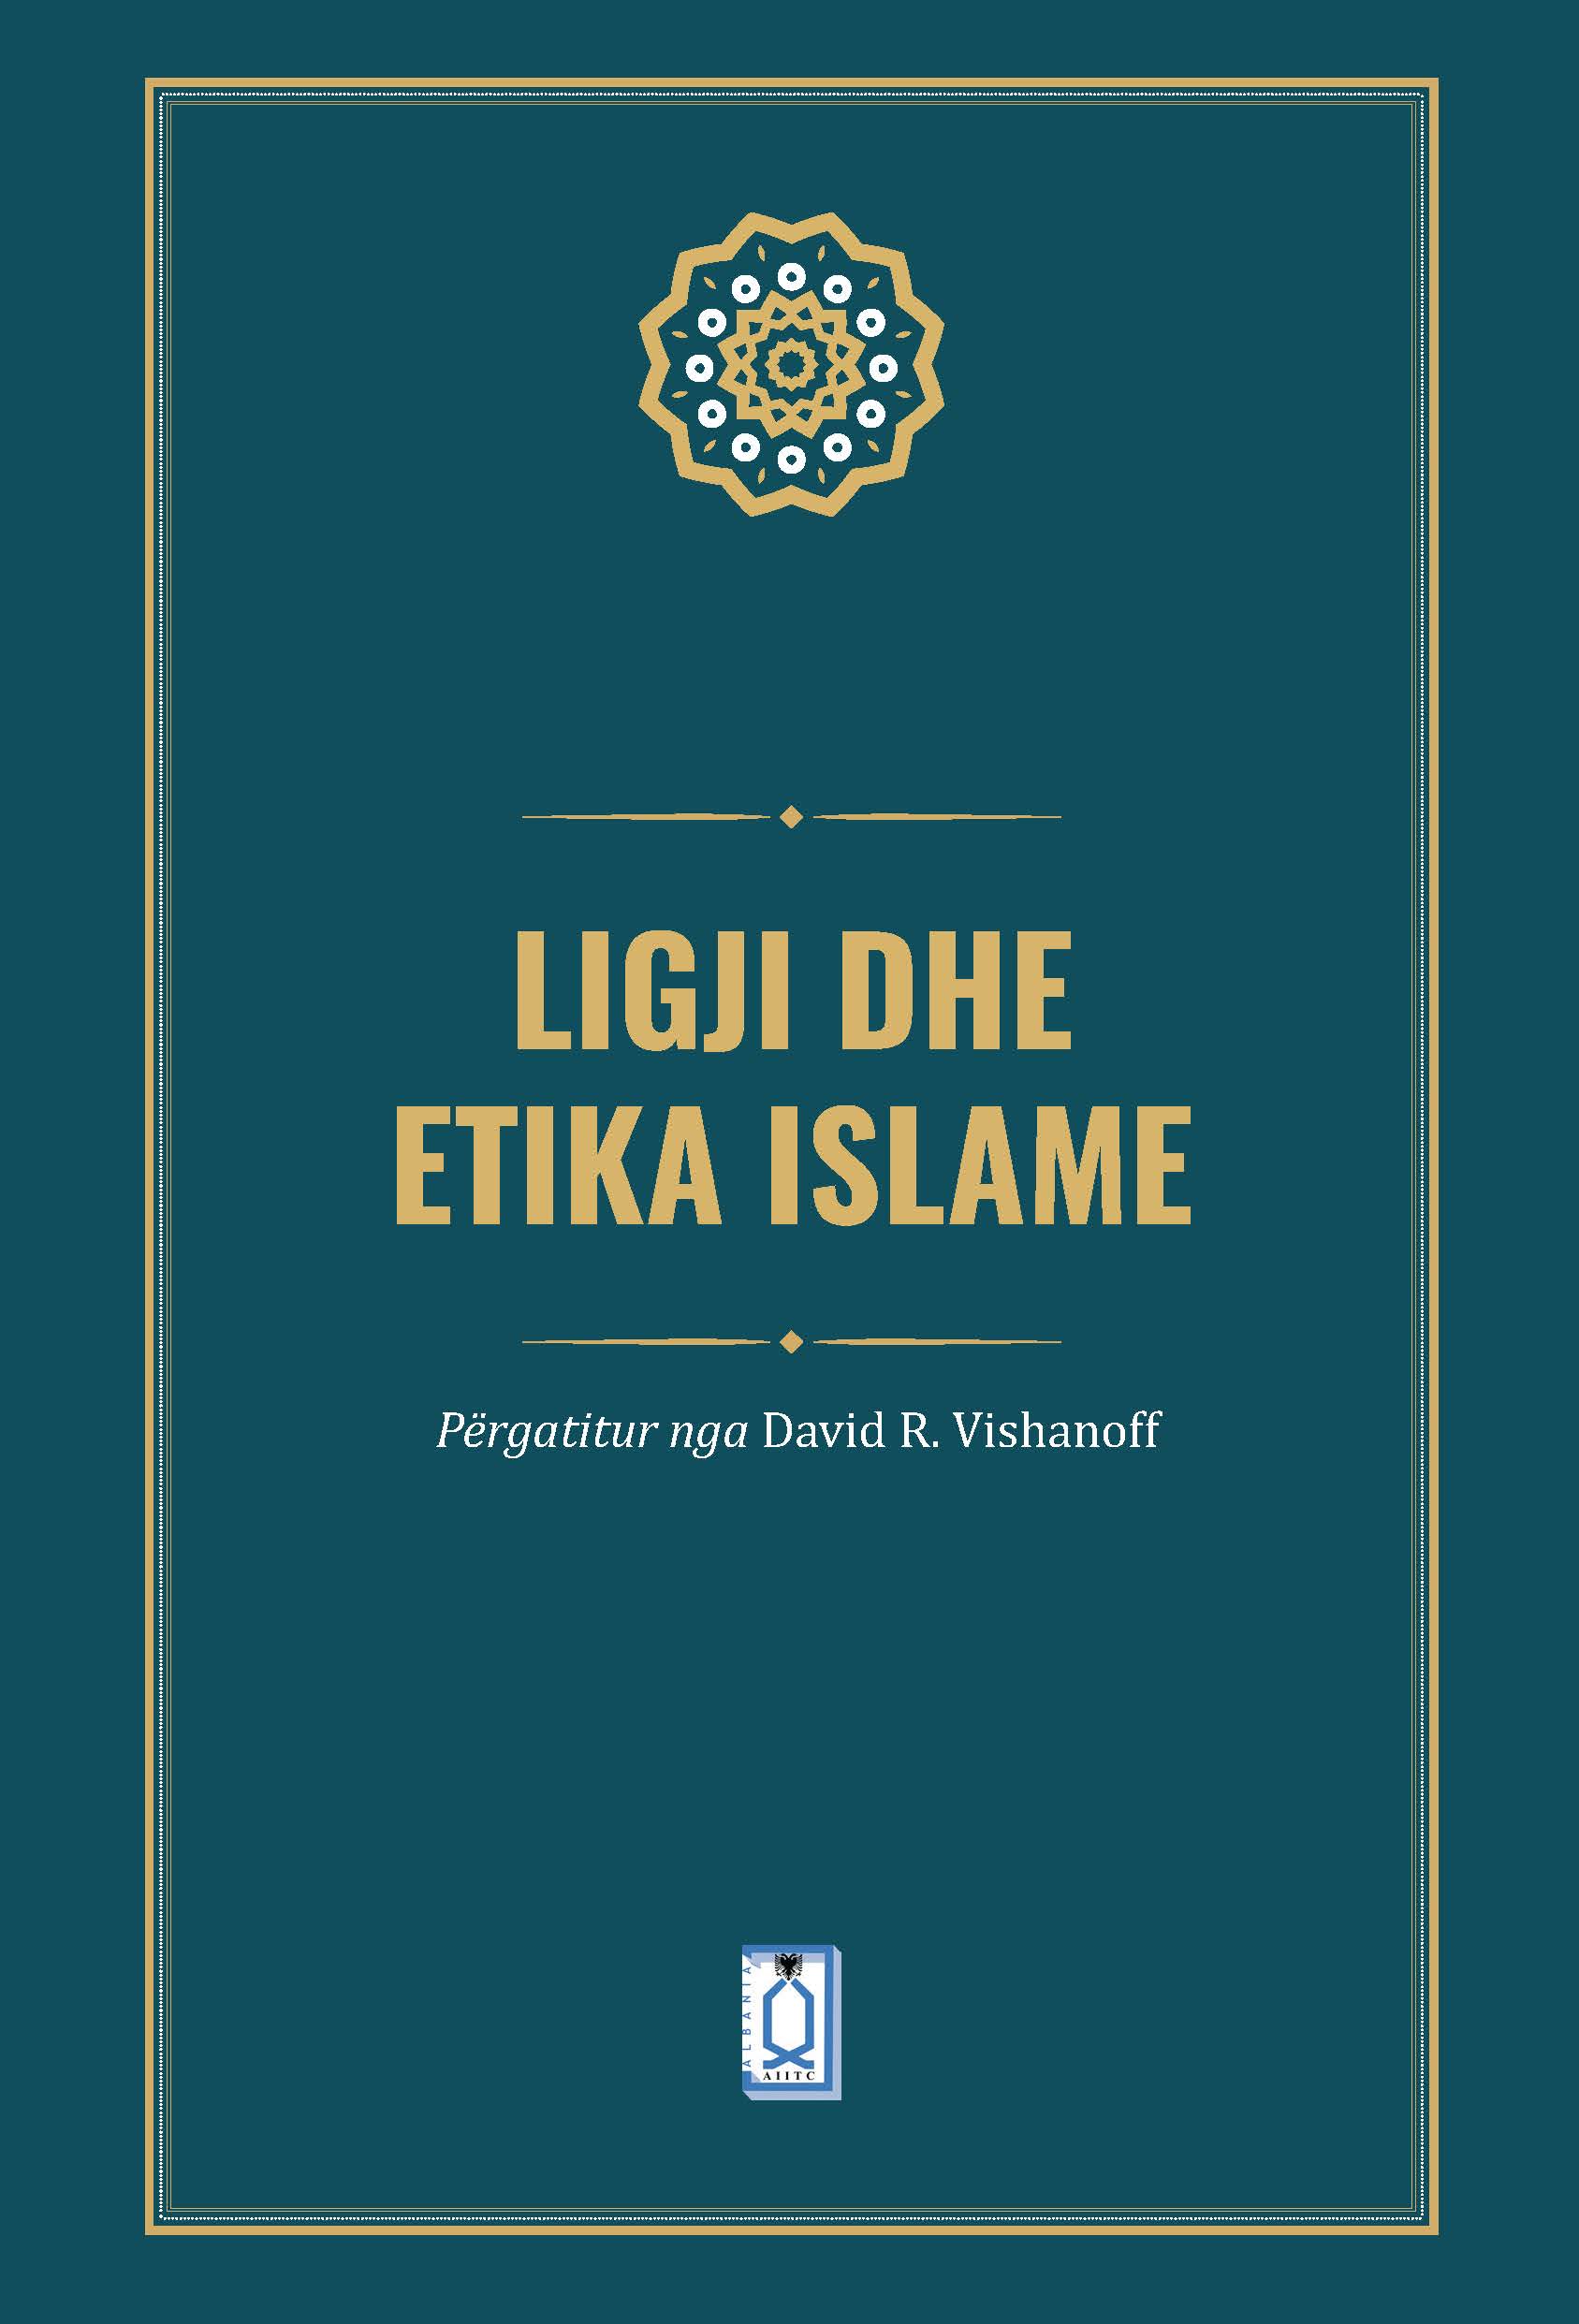 Albanian: Ligji dhe Etika Islame (Islamic Law and Ethics)